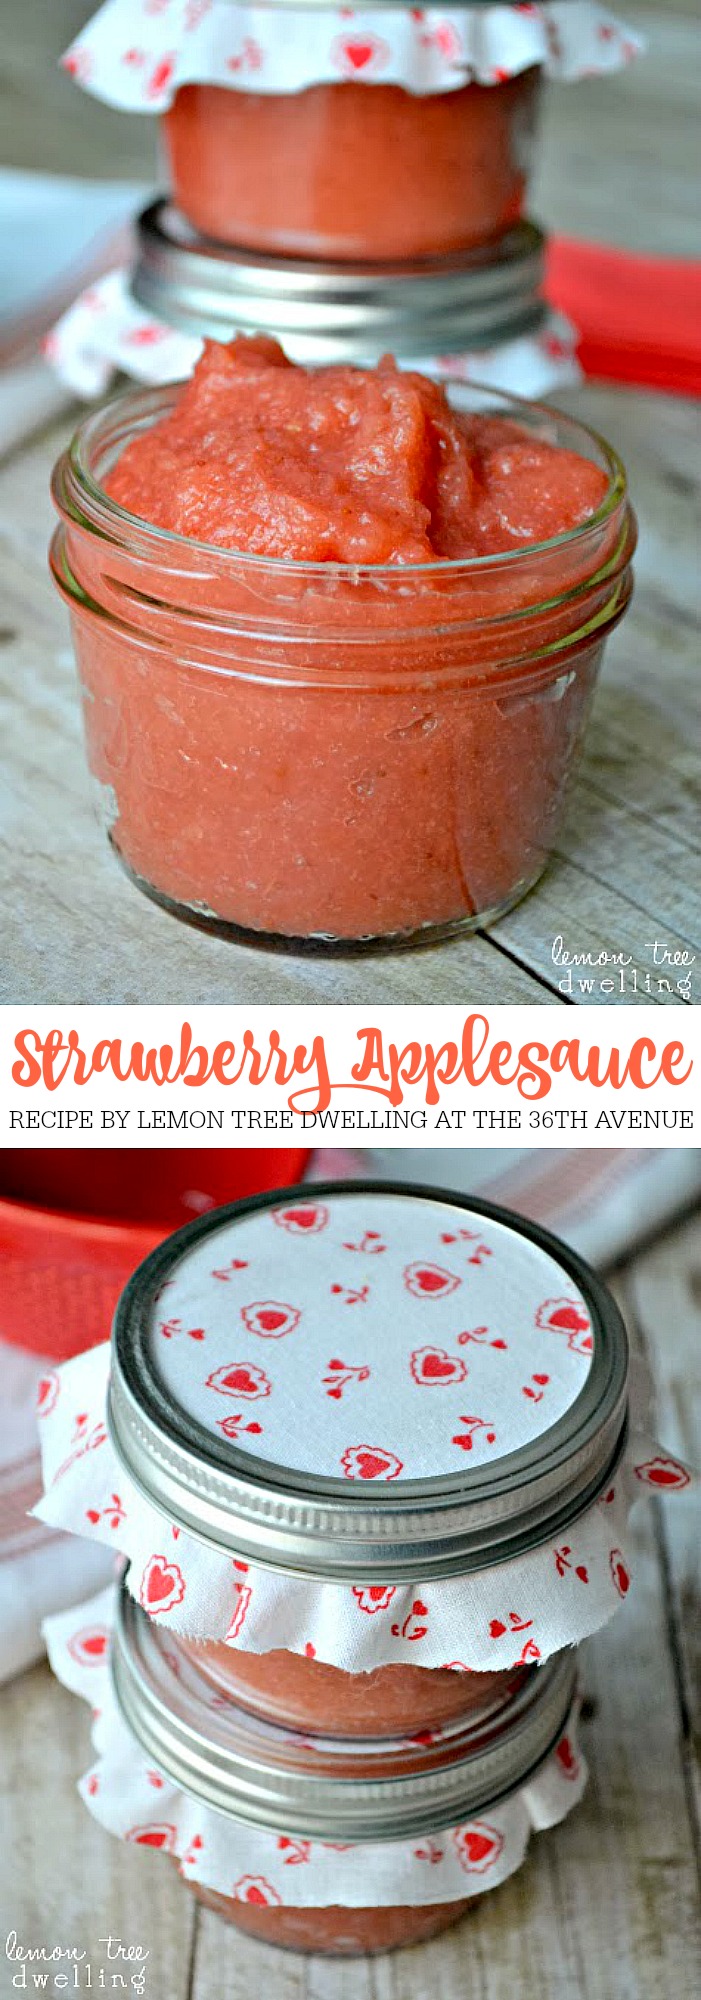 Strawberry Applesauce Recipe at the36thavenue.com